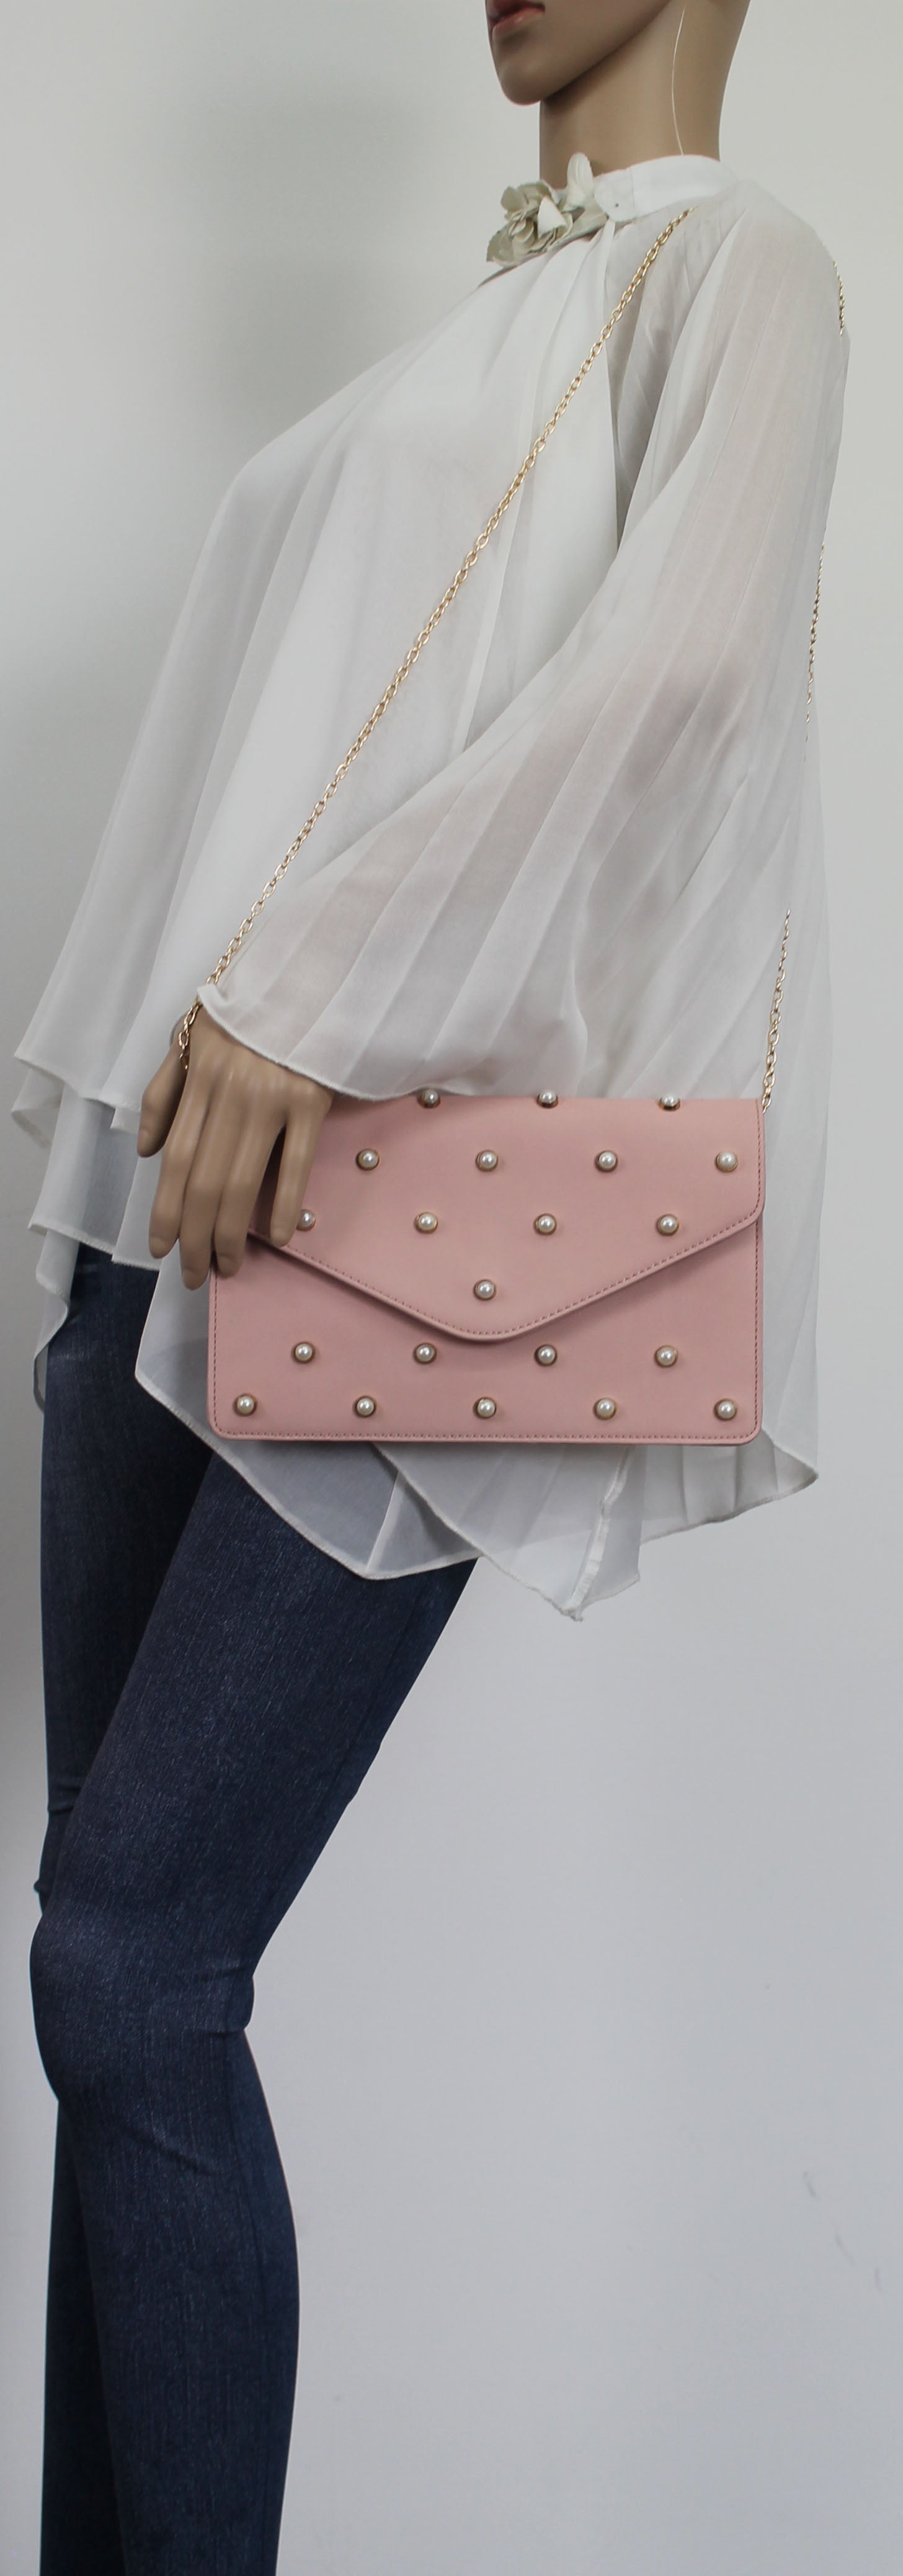 SWANKYSWANS Emily Pearl Clutch Bag Pink Cute Cheap Clutch Bag For Weddings School and Work